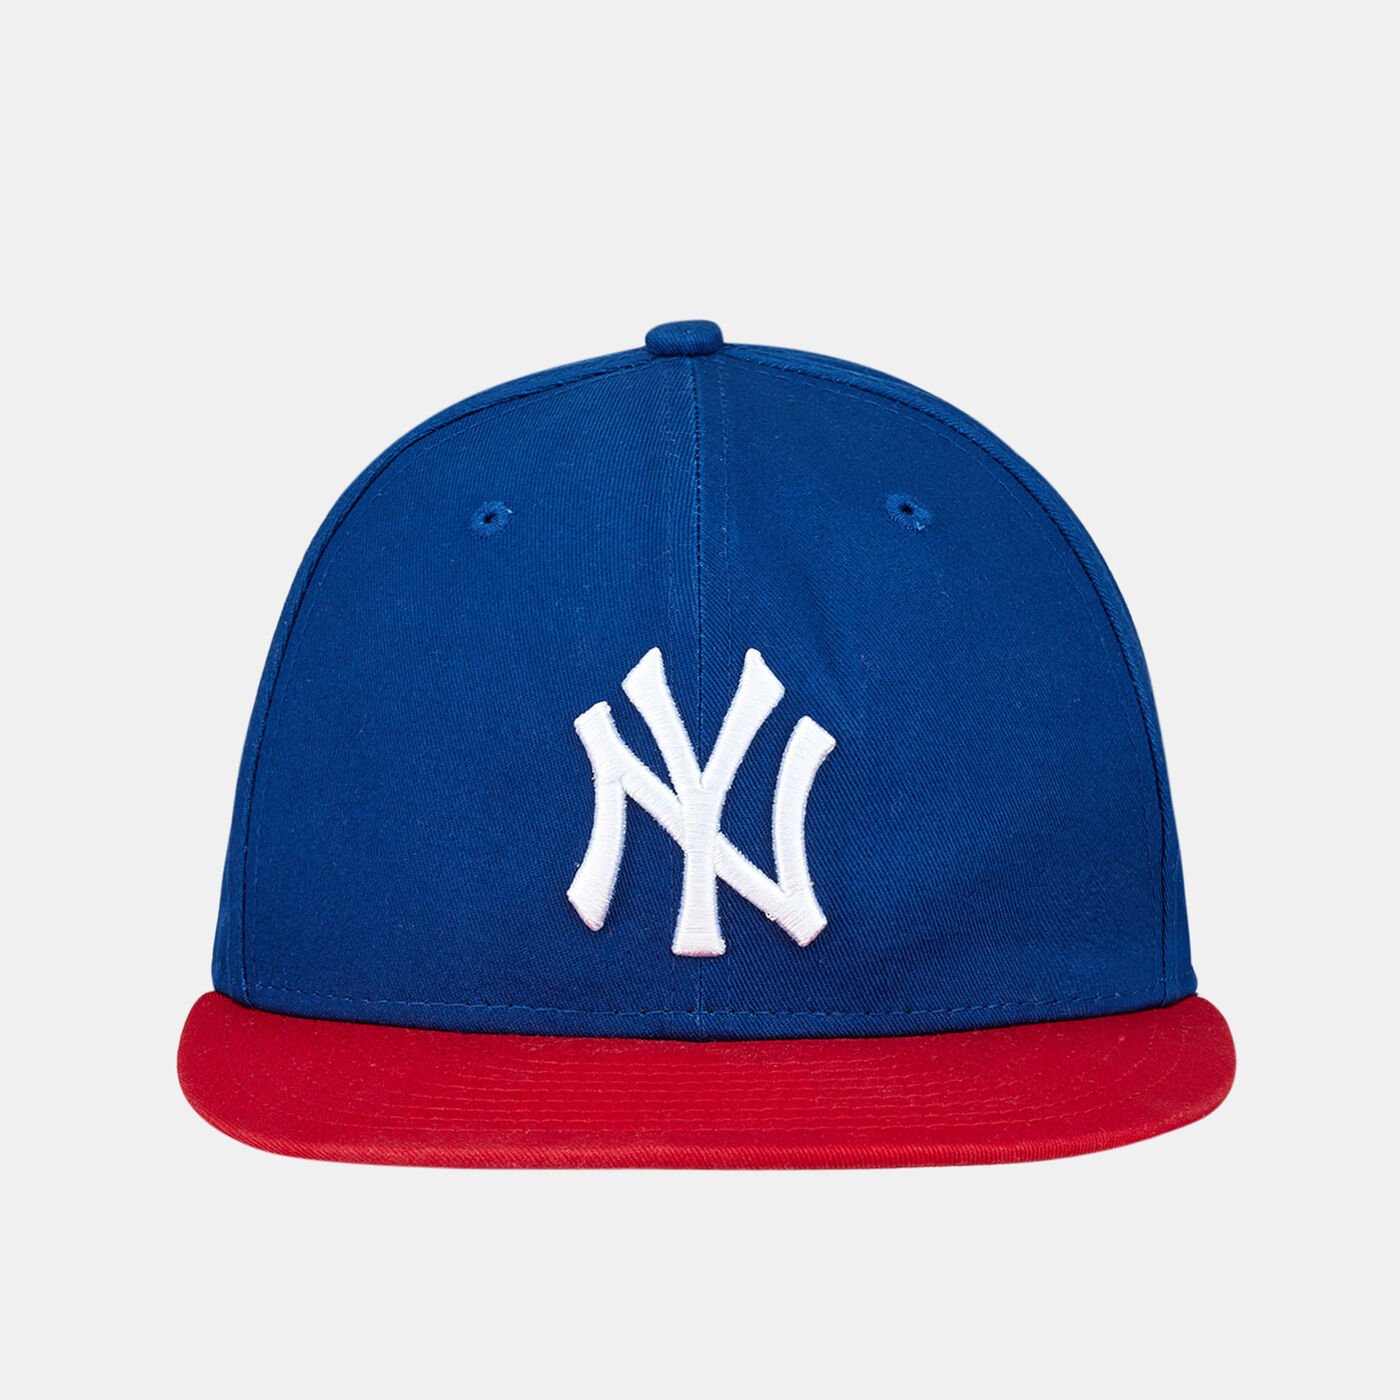 Men's MLB New York Yankees 9 FIFTY Cap